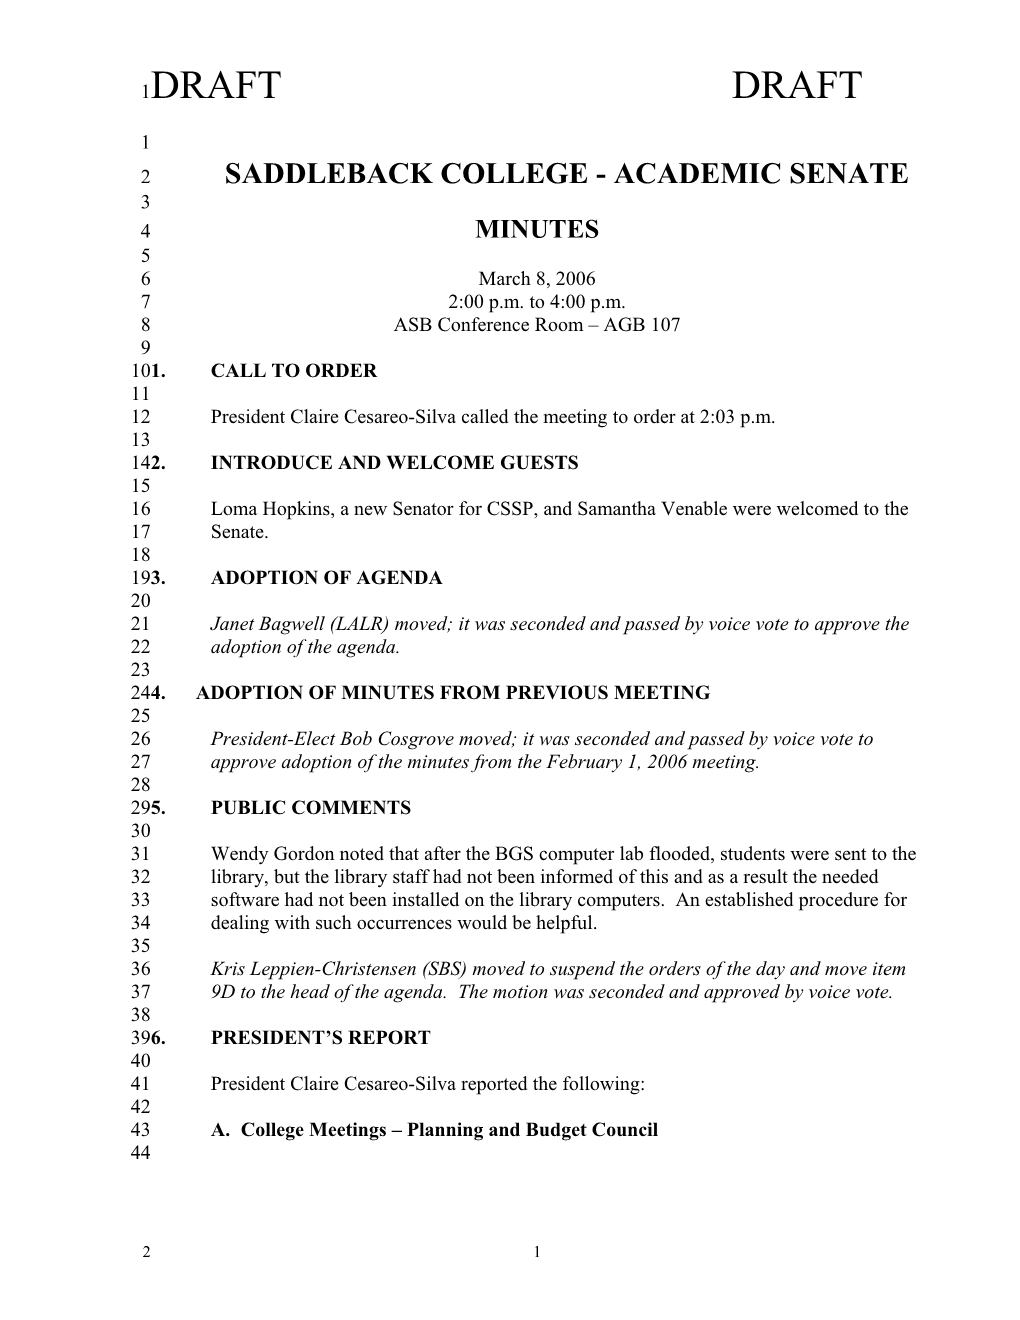 Saddleback College - Academic Senate